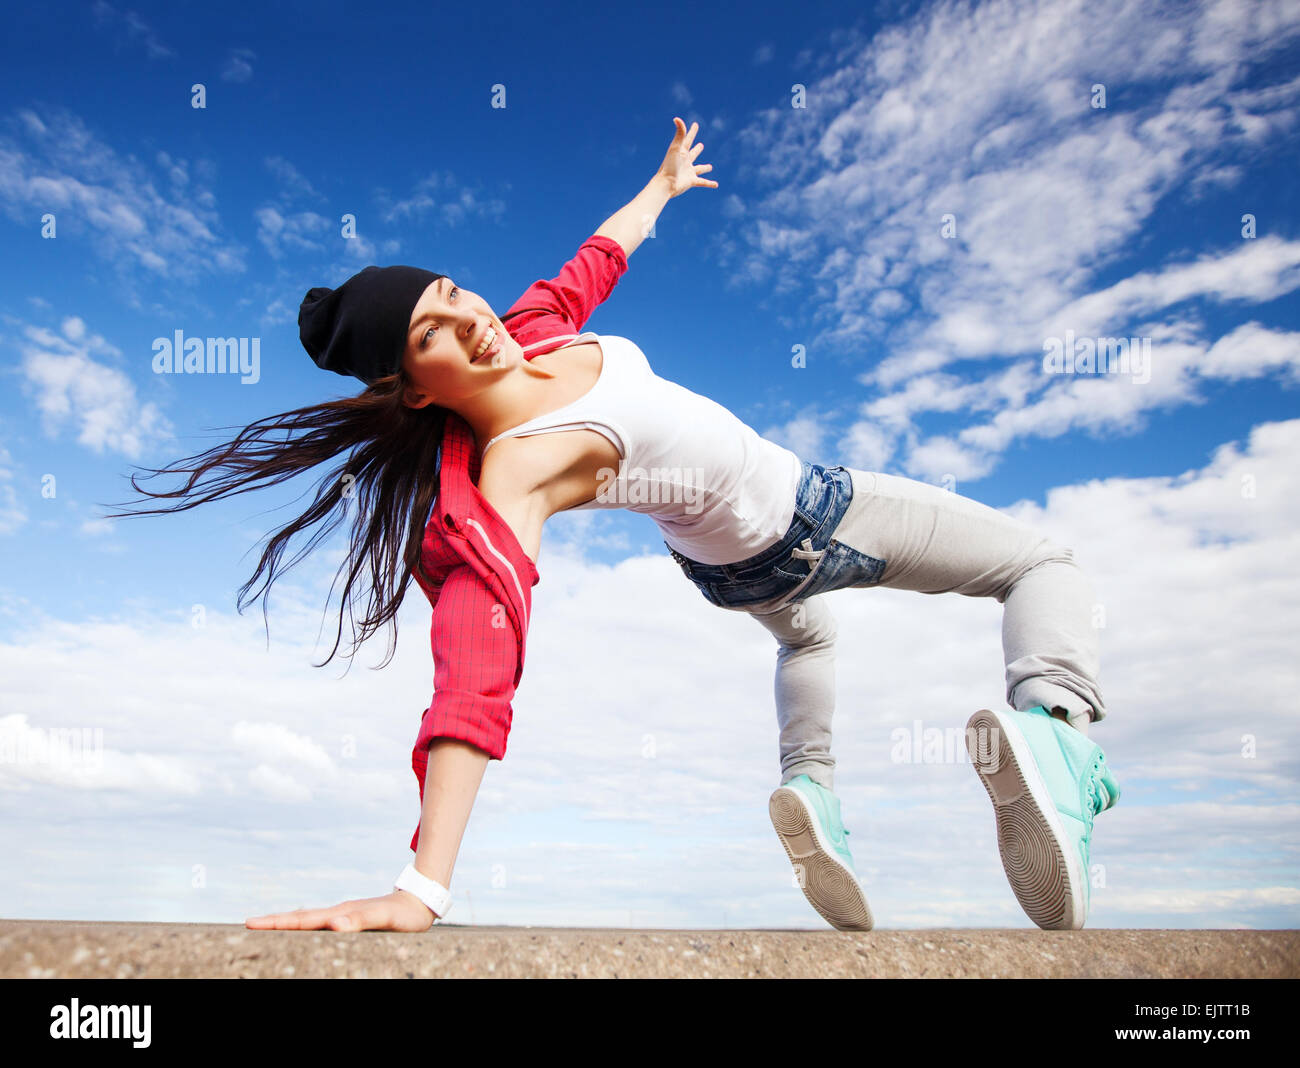 beautiful dancing girl in movement Stock Photo